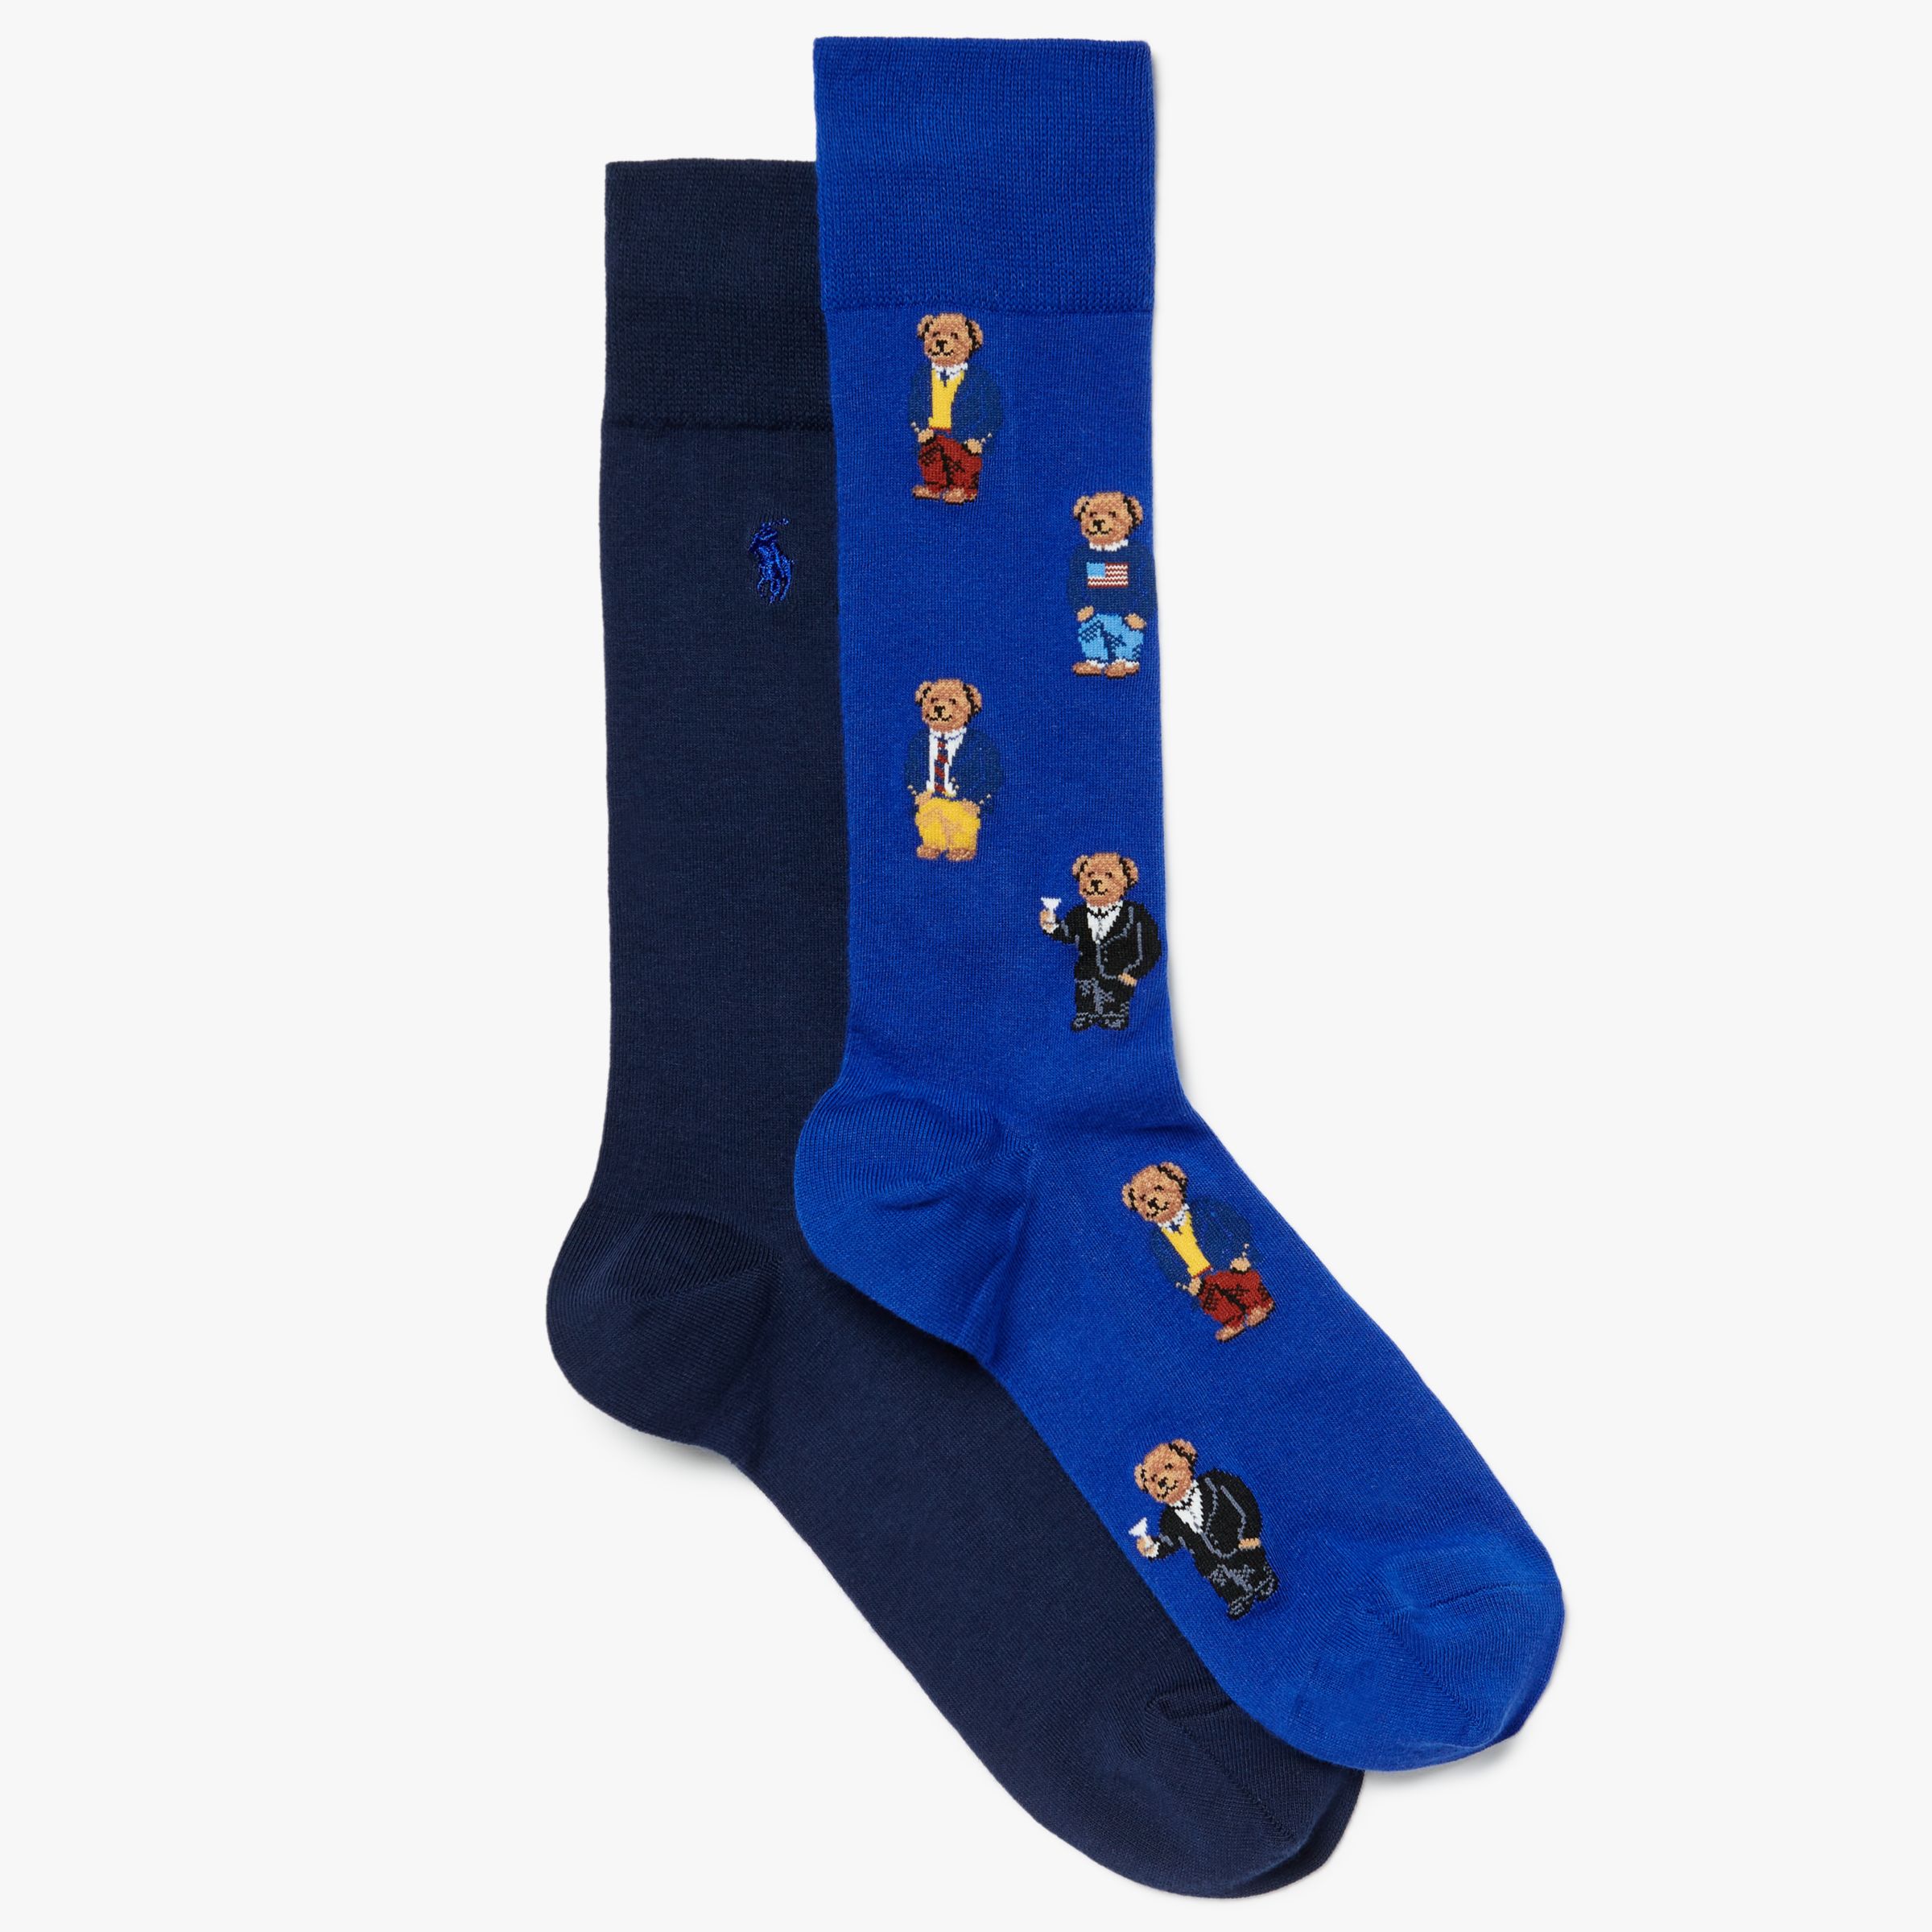 navy blue polo socks